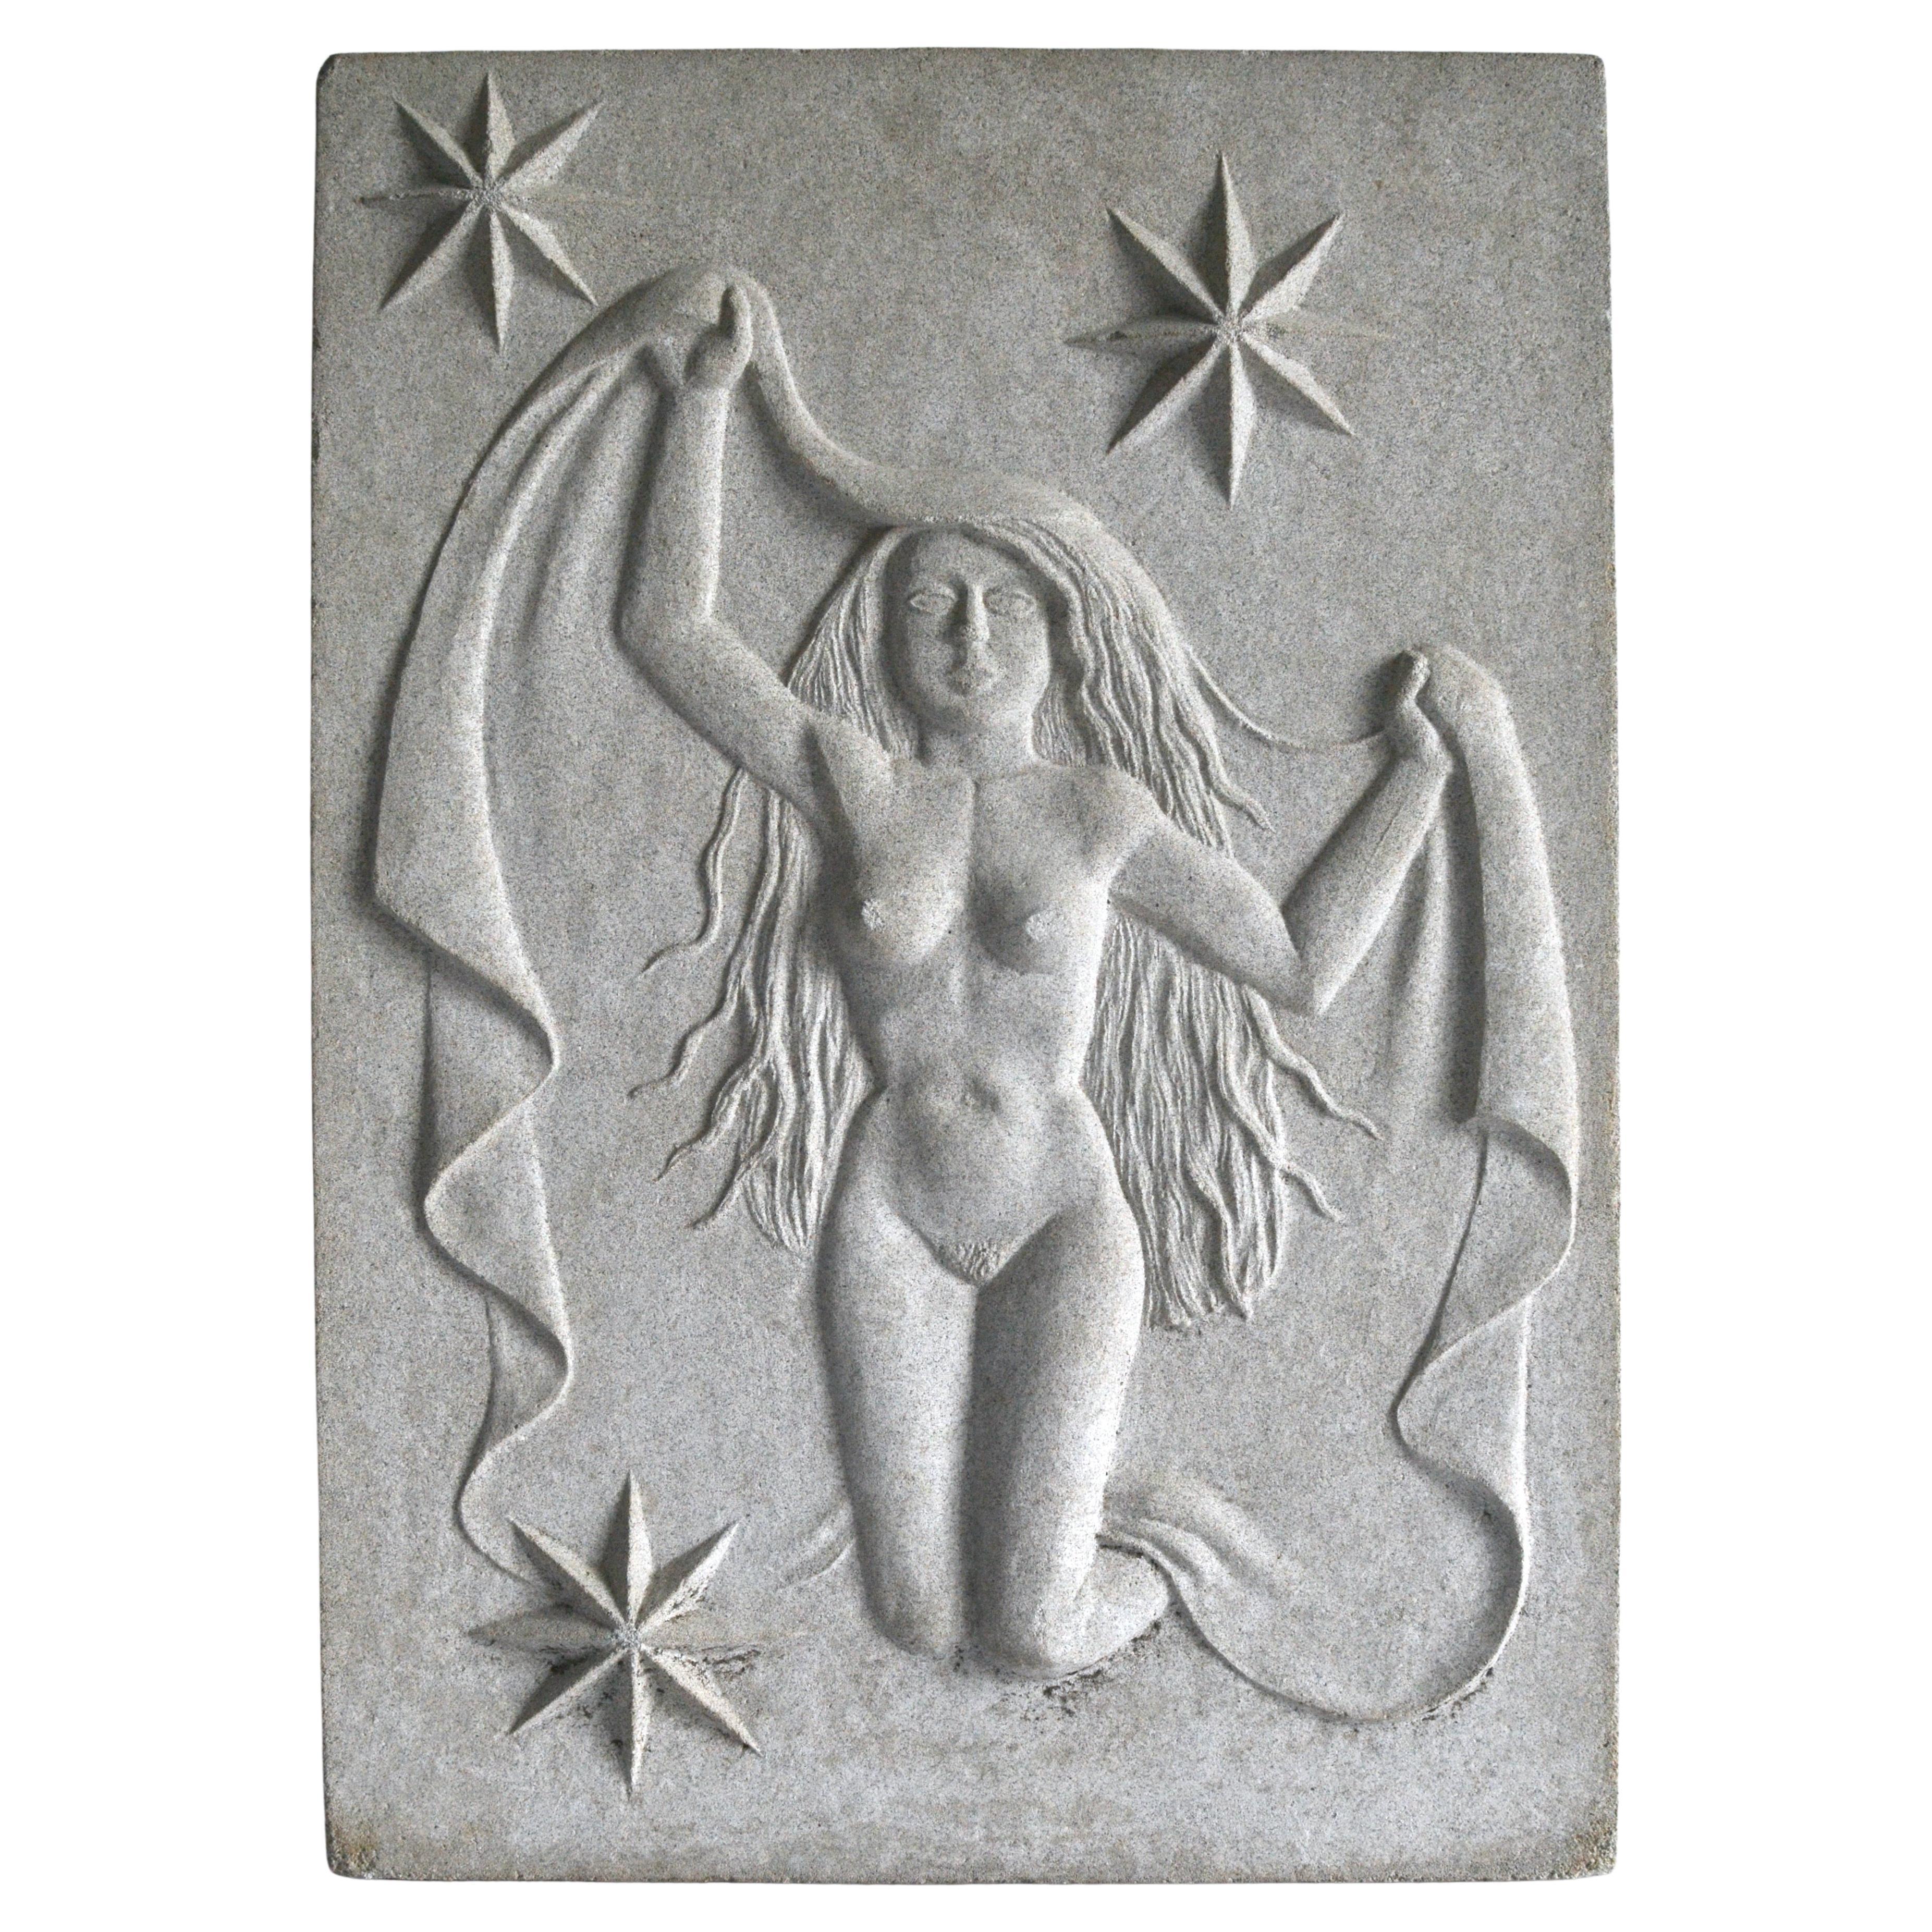 Zodiac Artificial Stone Relief Sign of Virgo, c. 1940